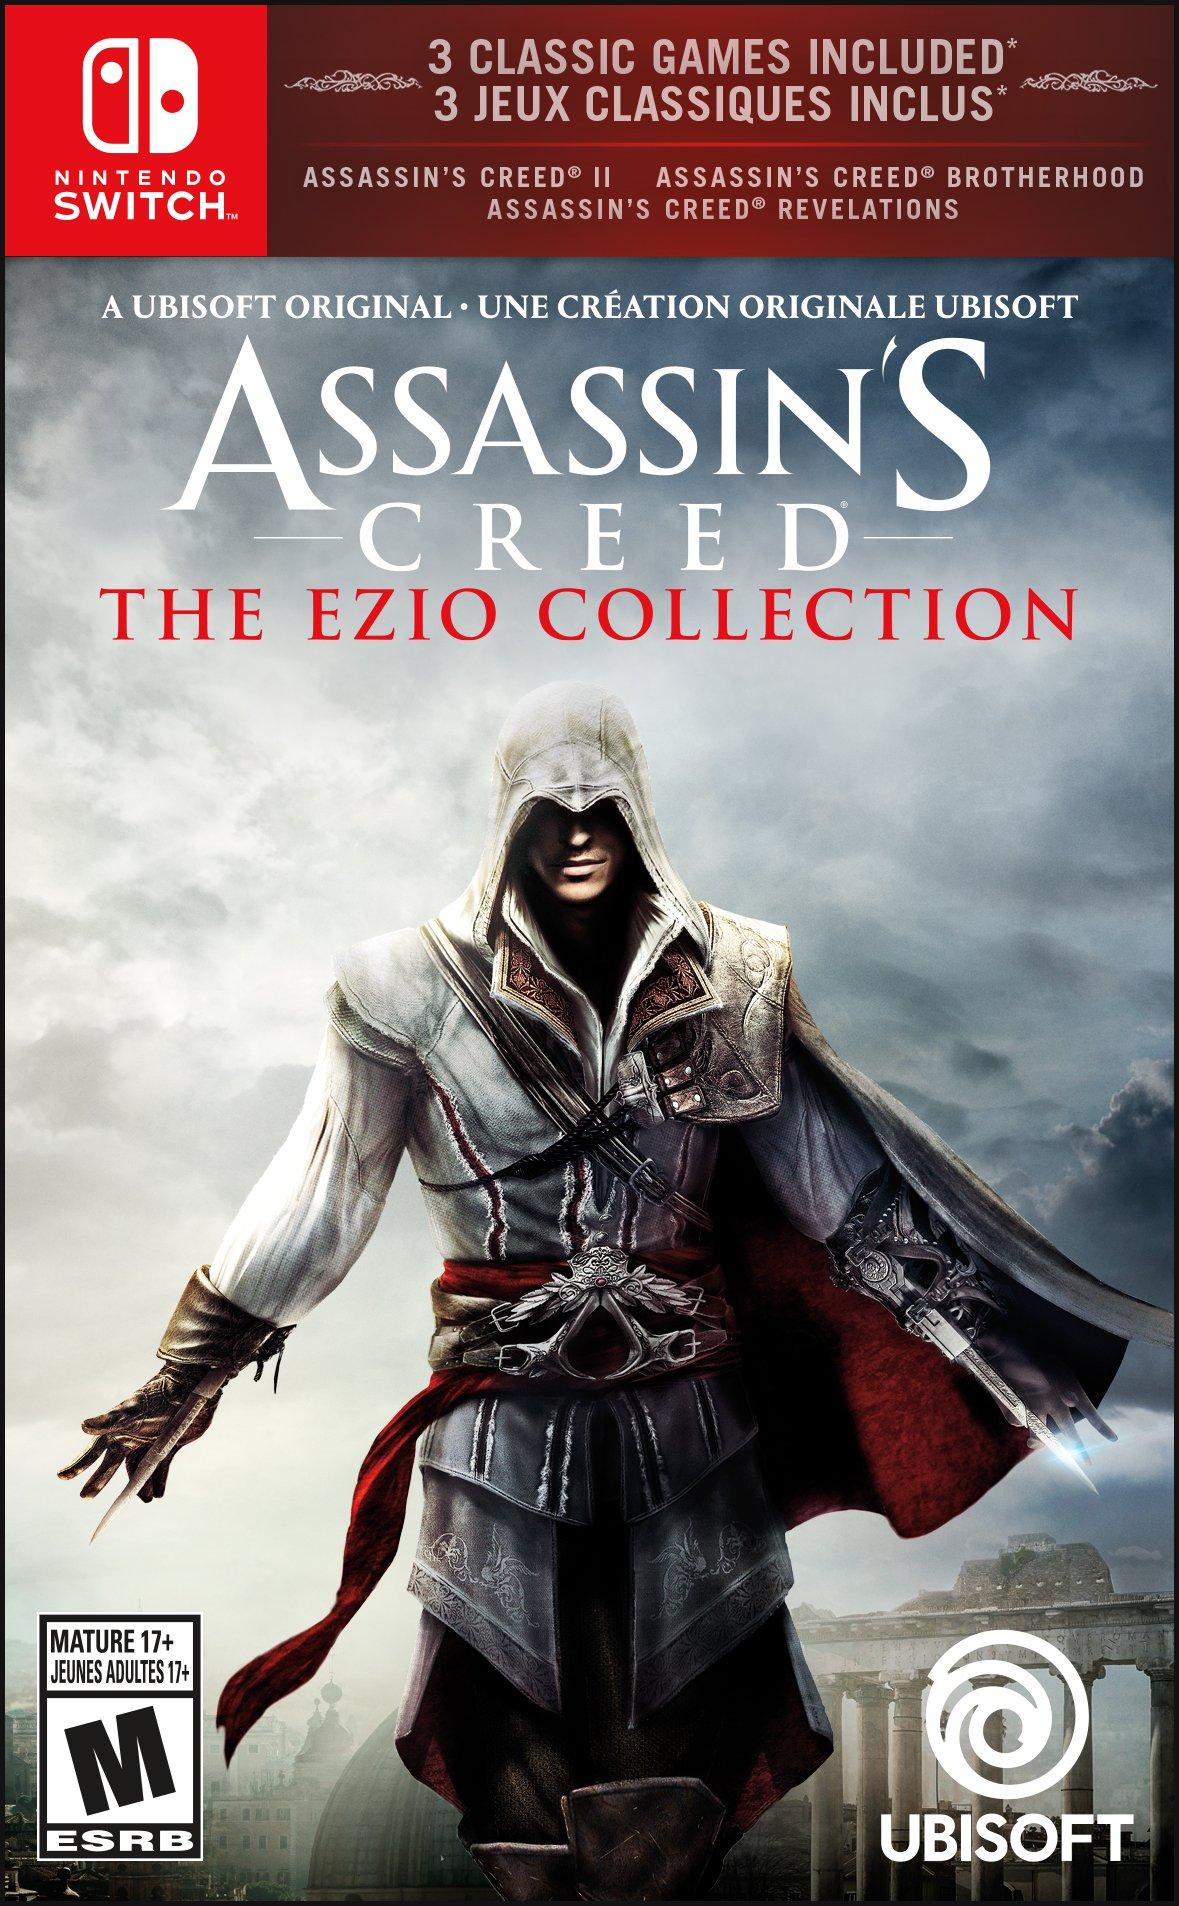 Assassin's Creed Revelations Walkthrough - Part 1 Let's Play HD